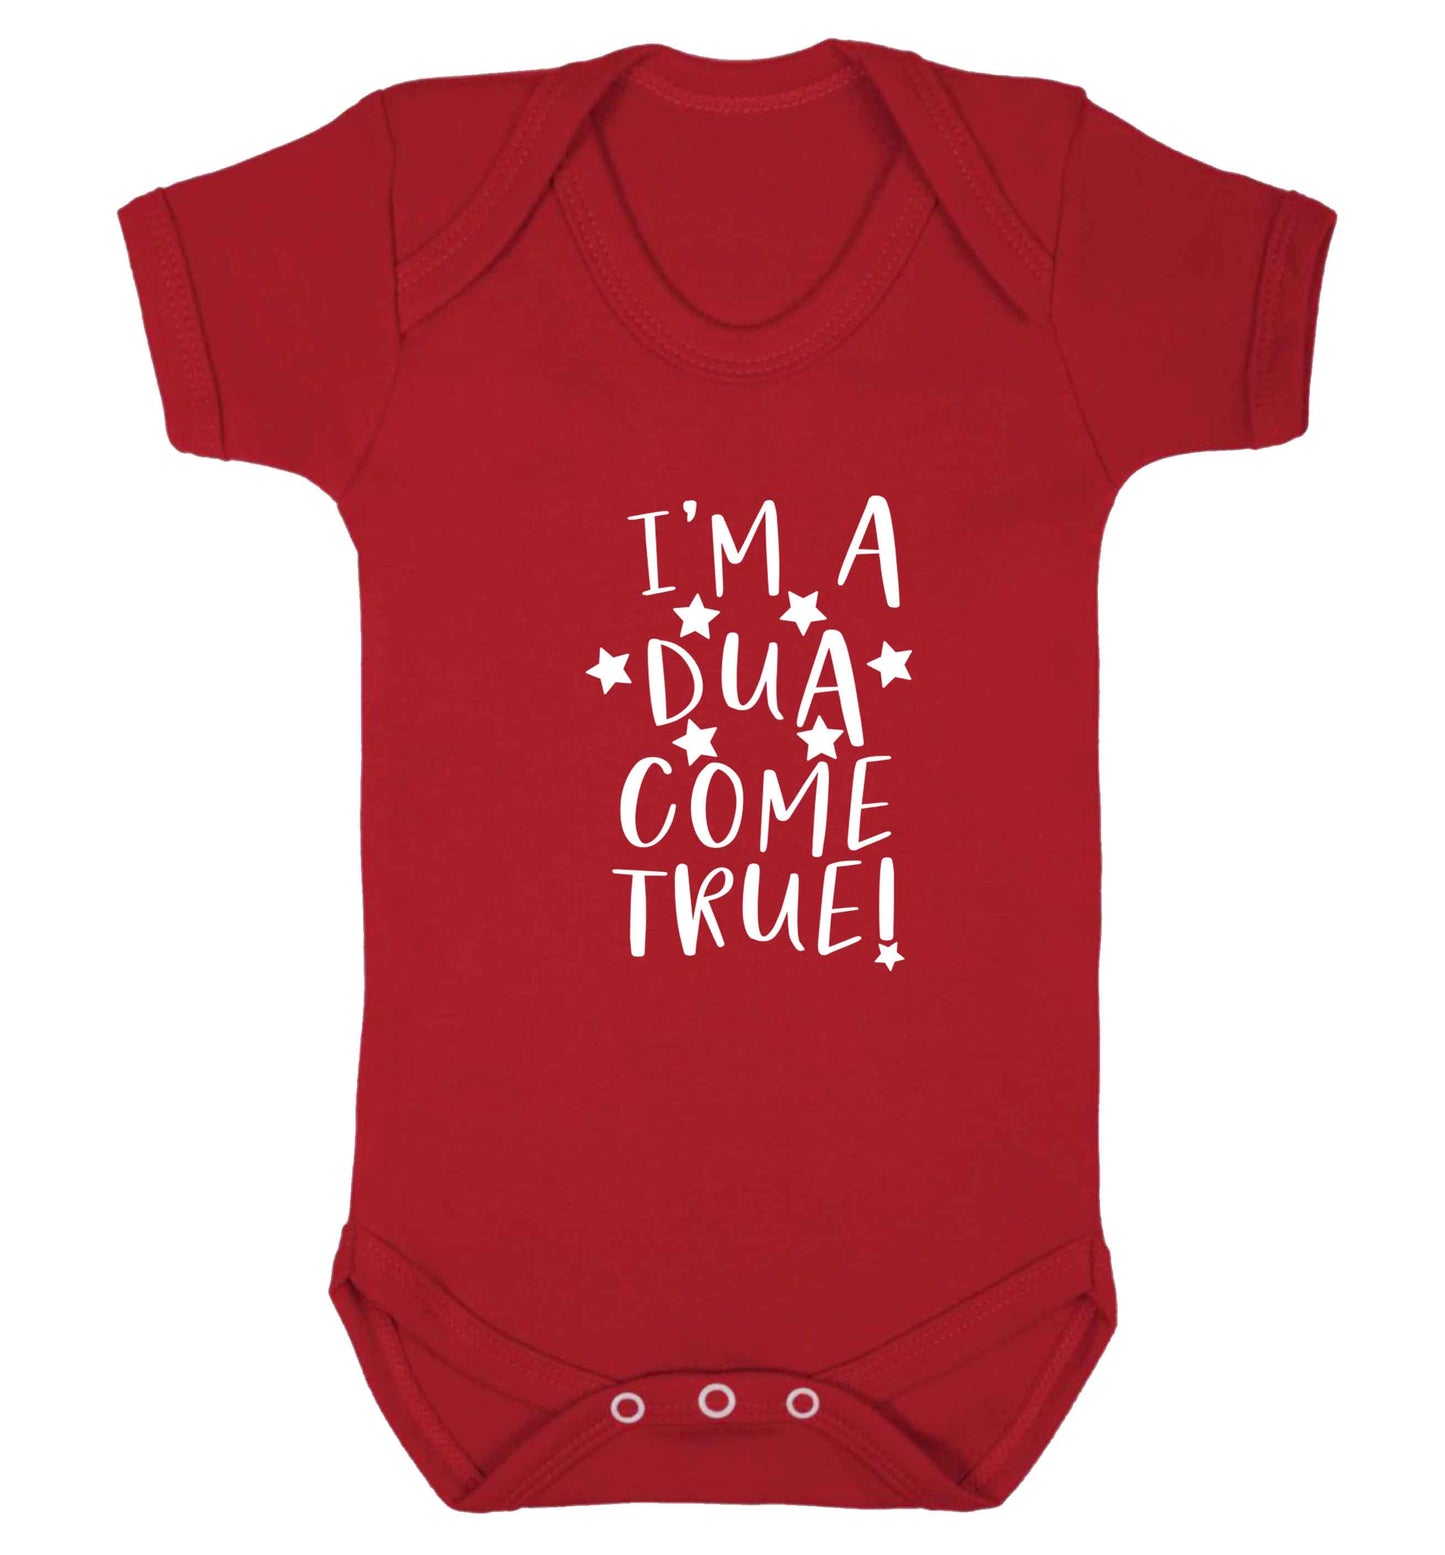 I'm a dua come true baby vest red 18-24 months